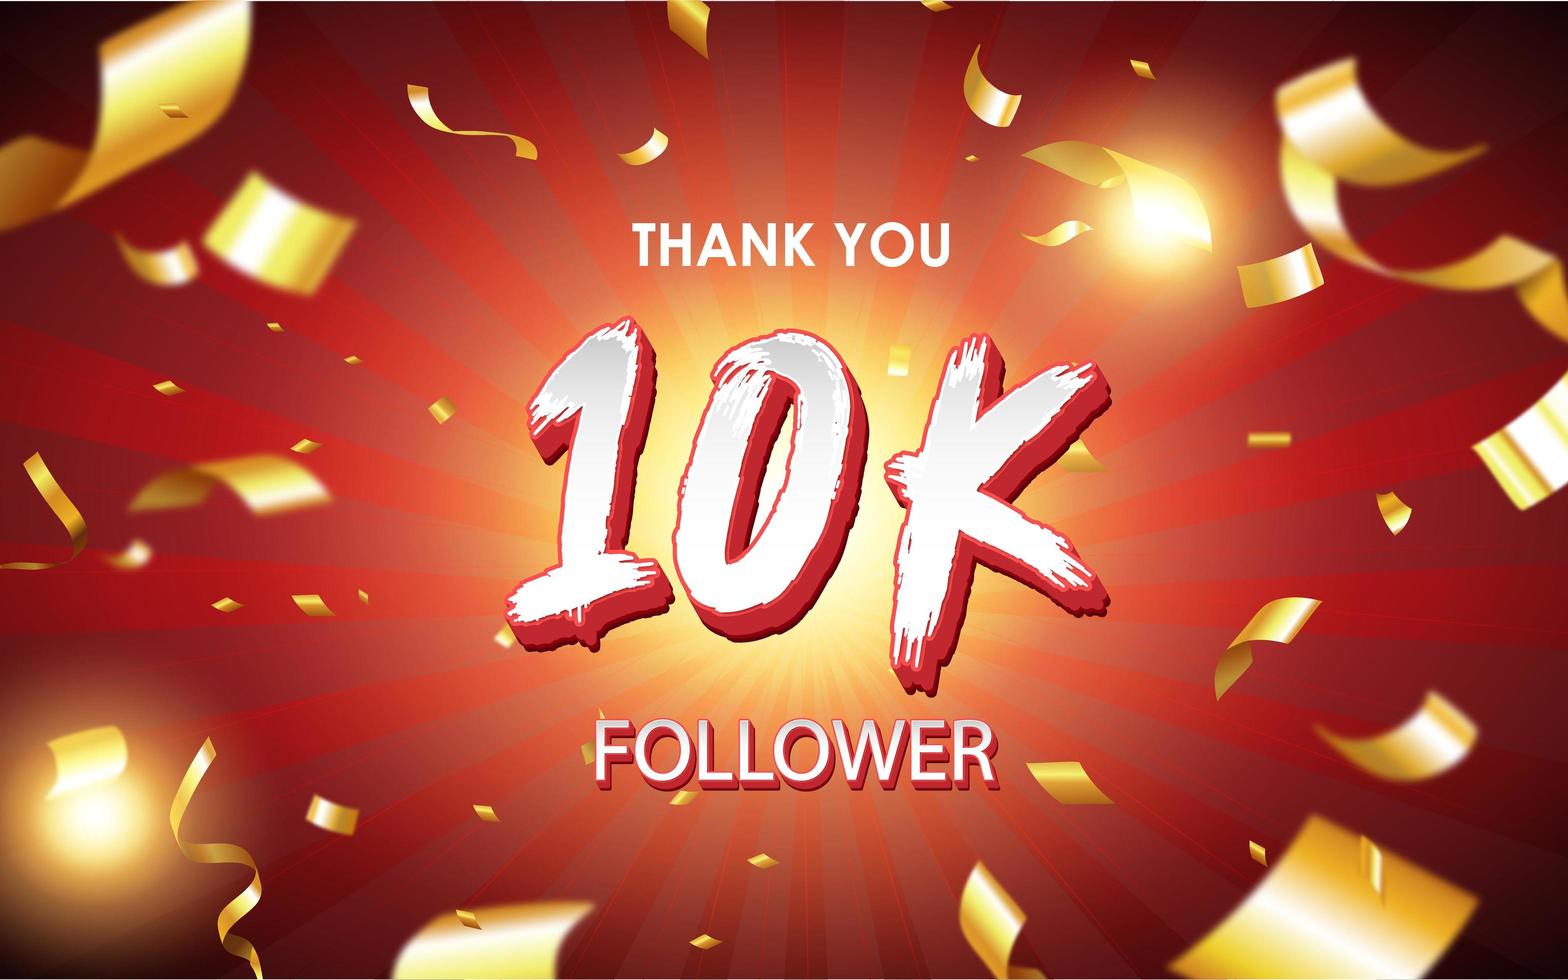 Celebrating 100k, 200K, 10K, 2K, 1K, 500K, 400K, 300K, 1K followers sign with golden sign and confetti of social media banner design photo